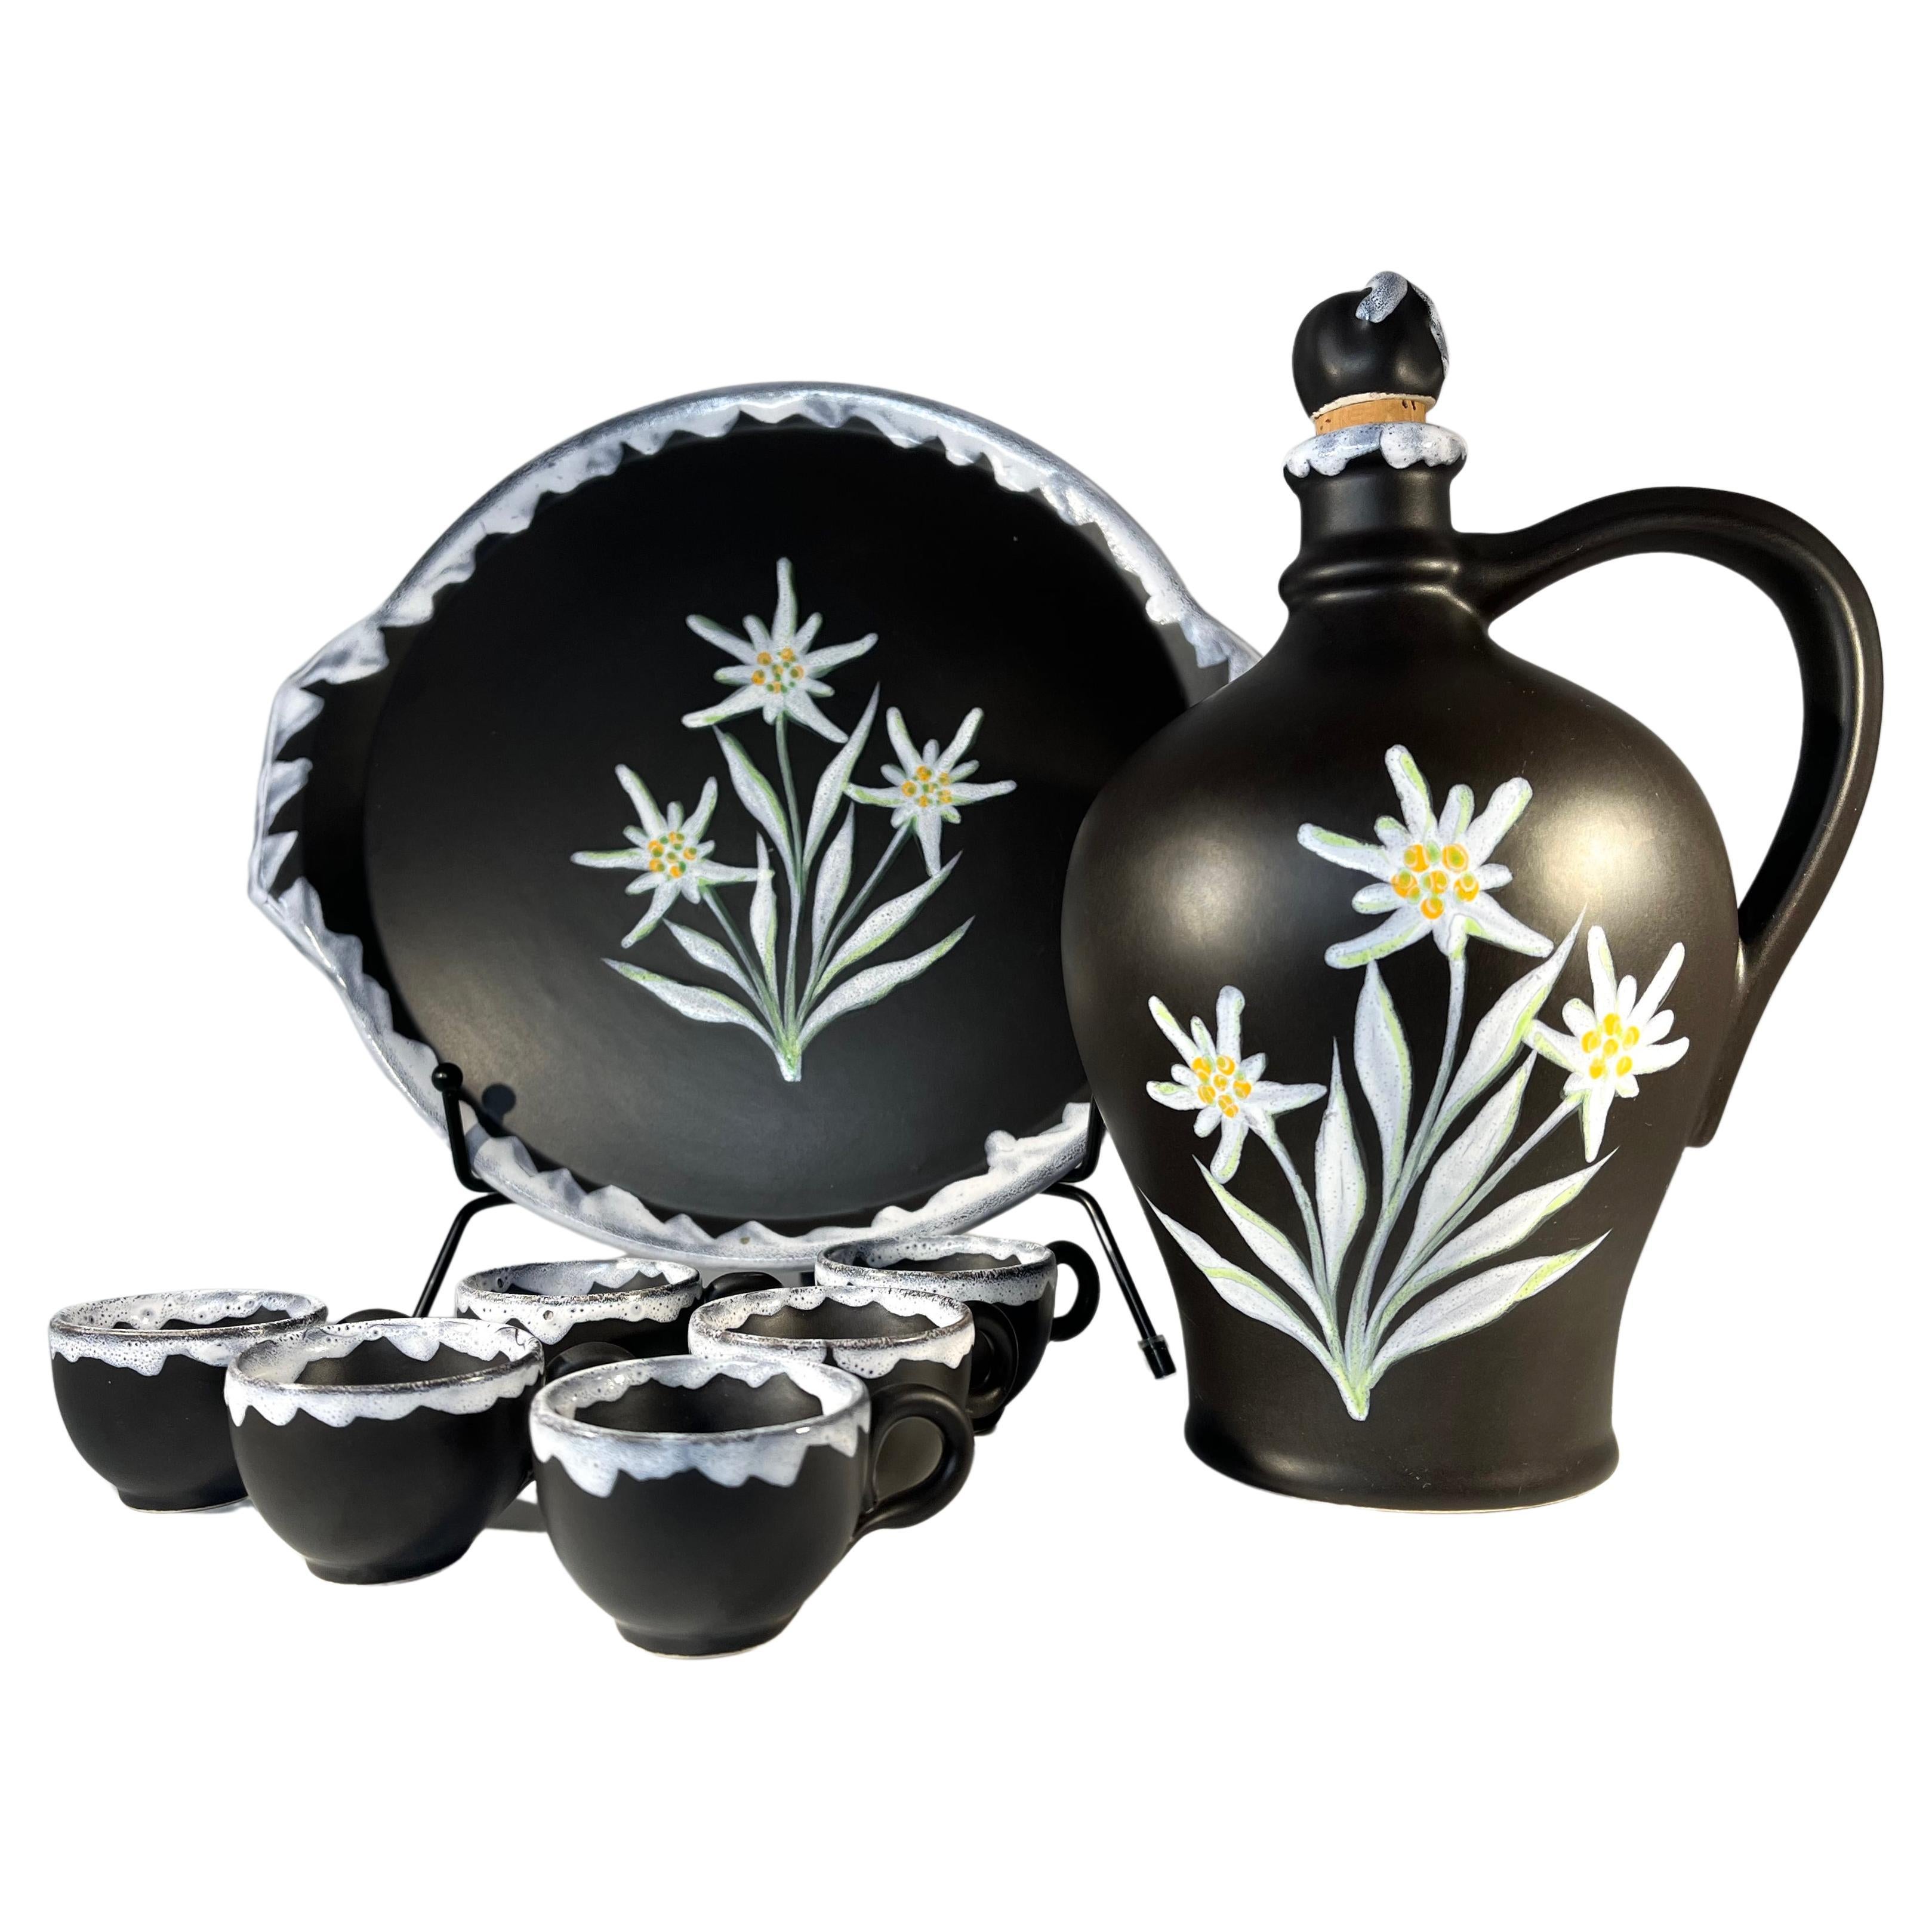 Wonderful Gabriel Fourmaintraux Edelweiss Flower Ceramic Liqueur Decanter Set  For Sale